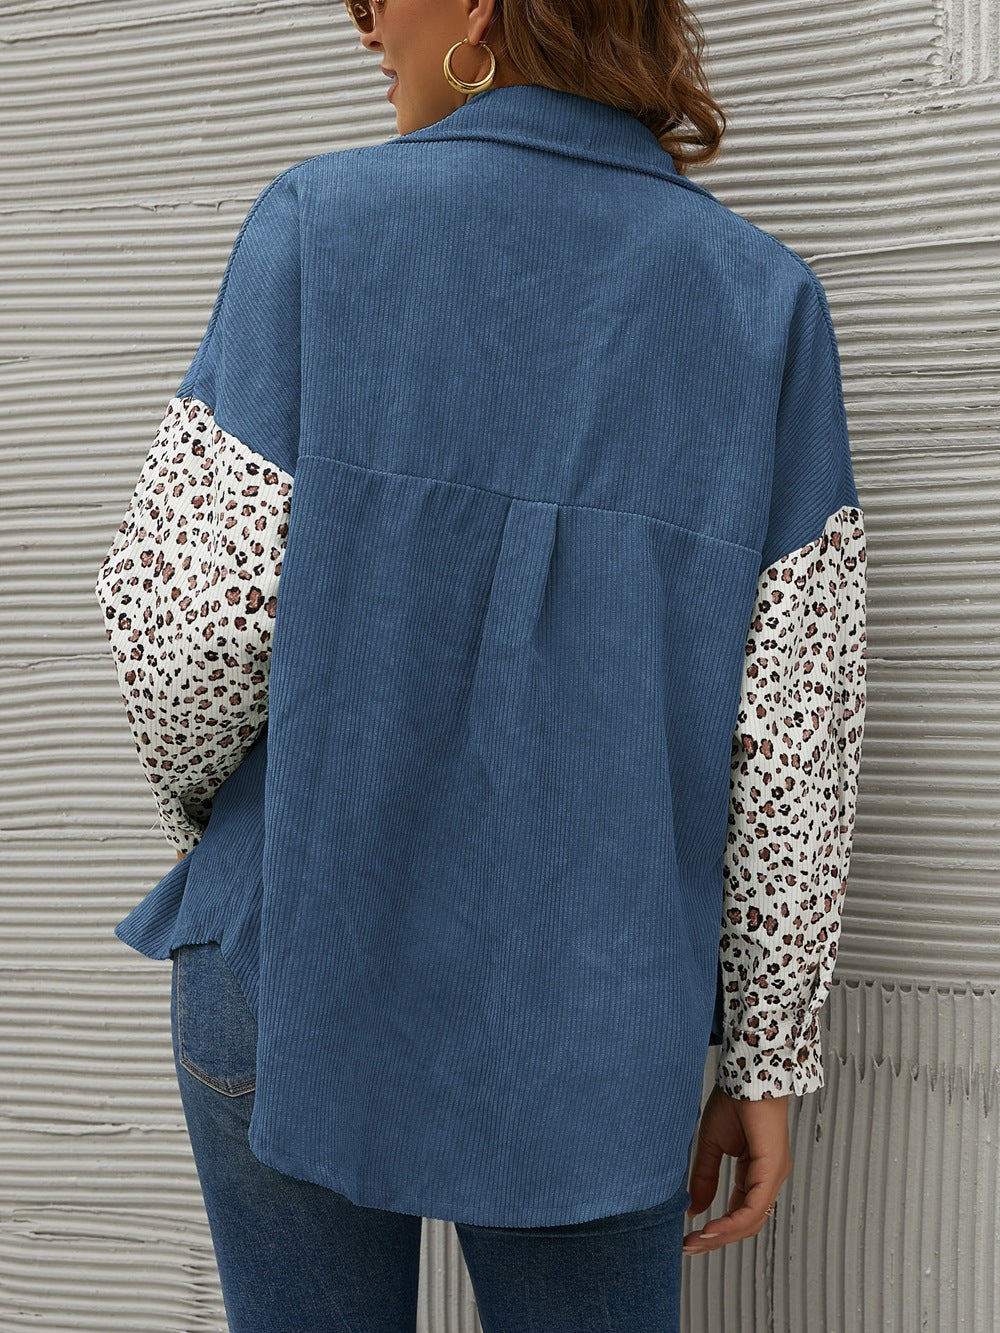 Casual Leopard Design Women Long Sleeves Shirts